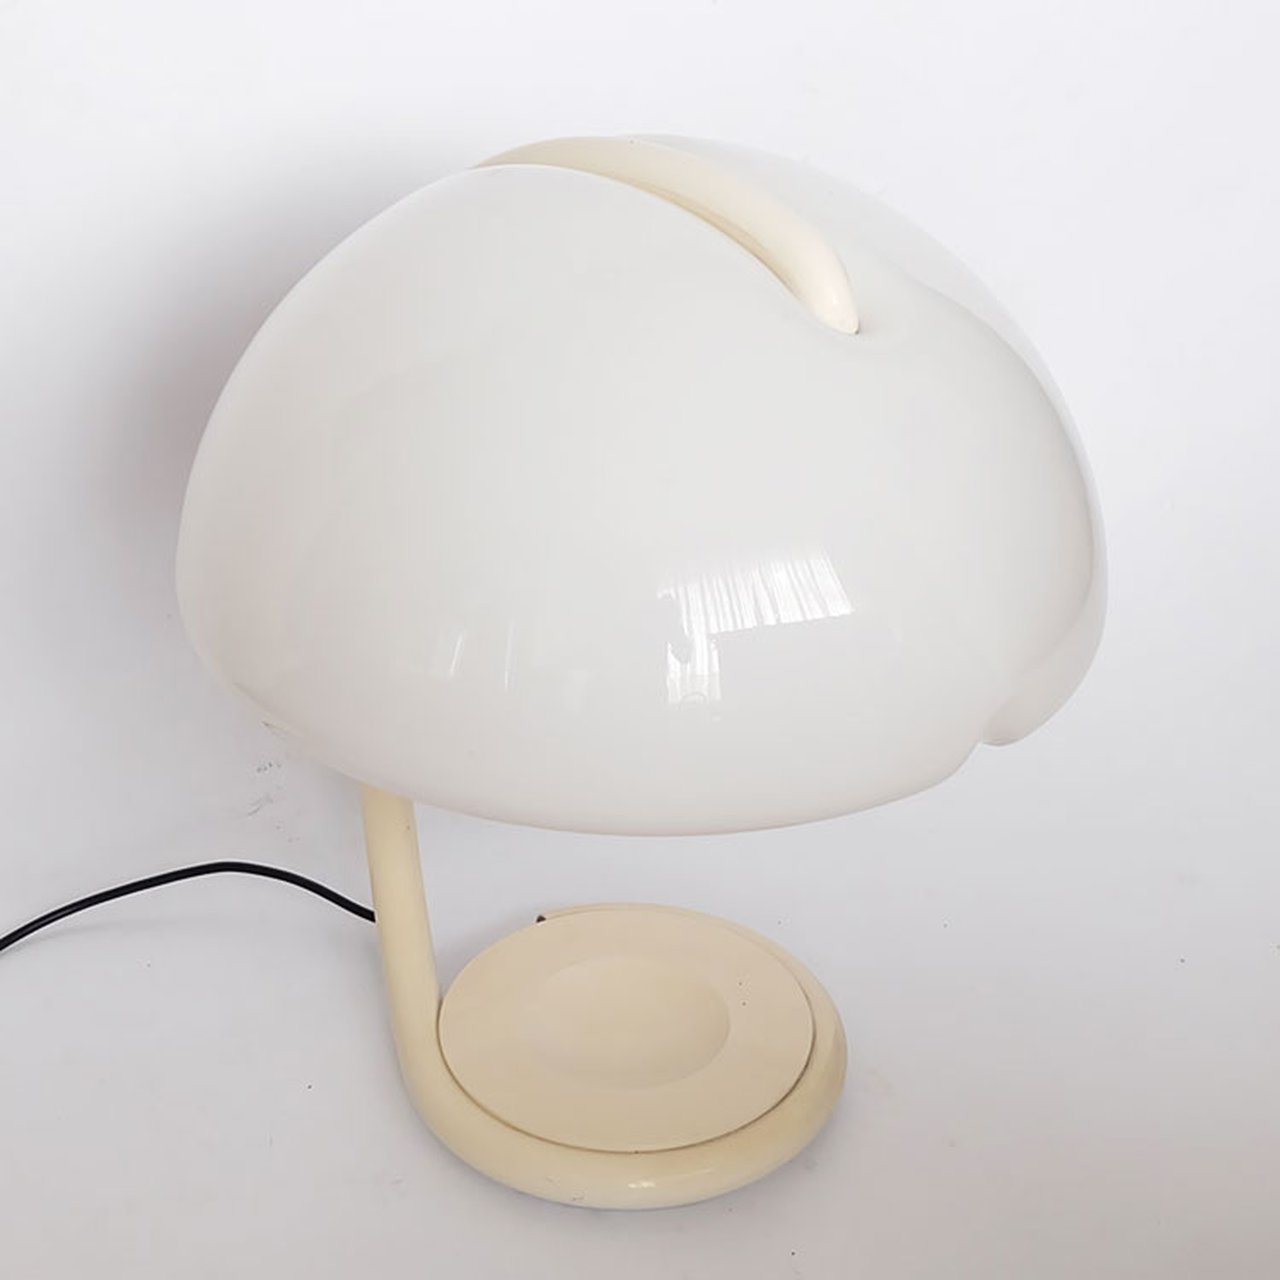 Design by Elio Martinelli. This design icon lamp, Serpente. image 10